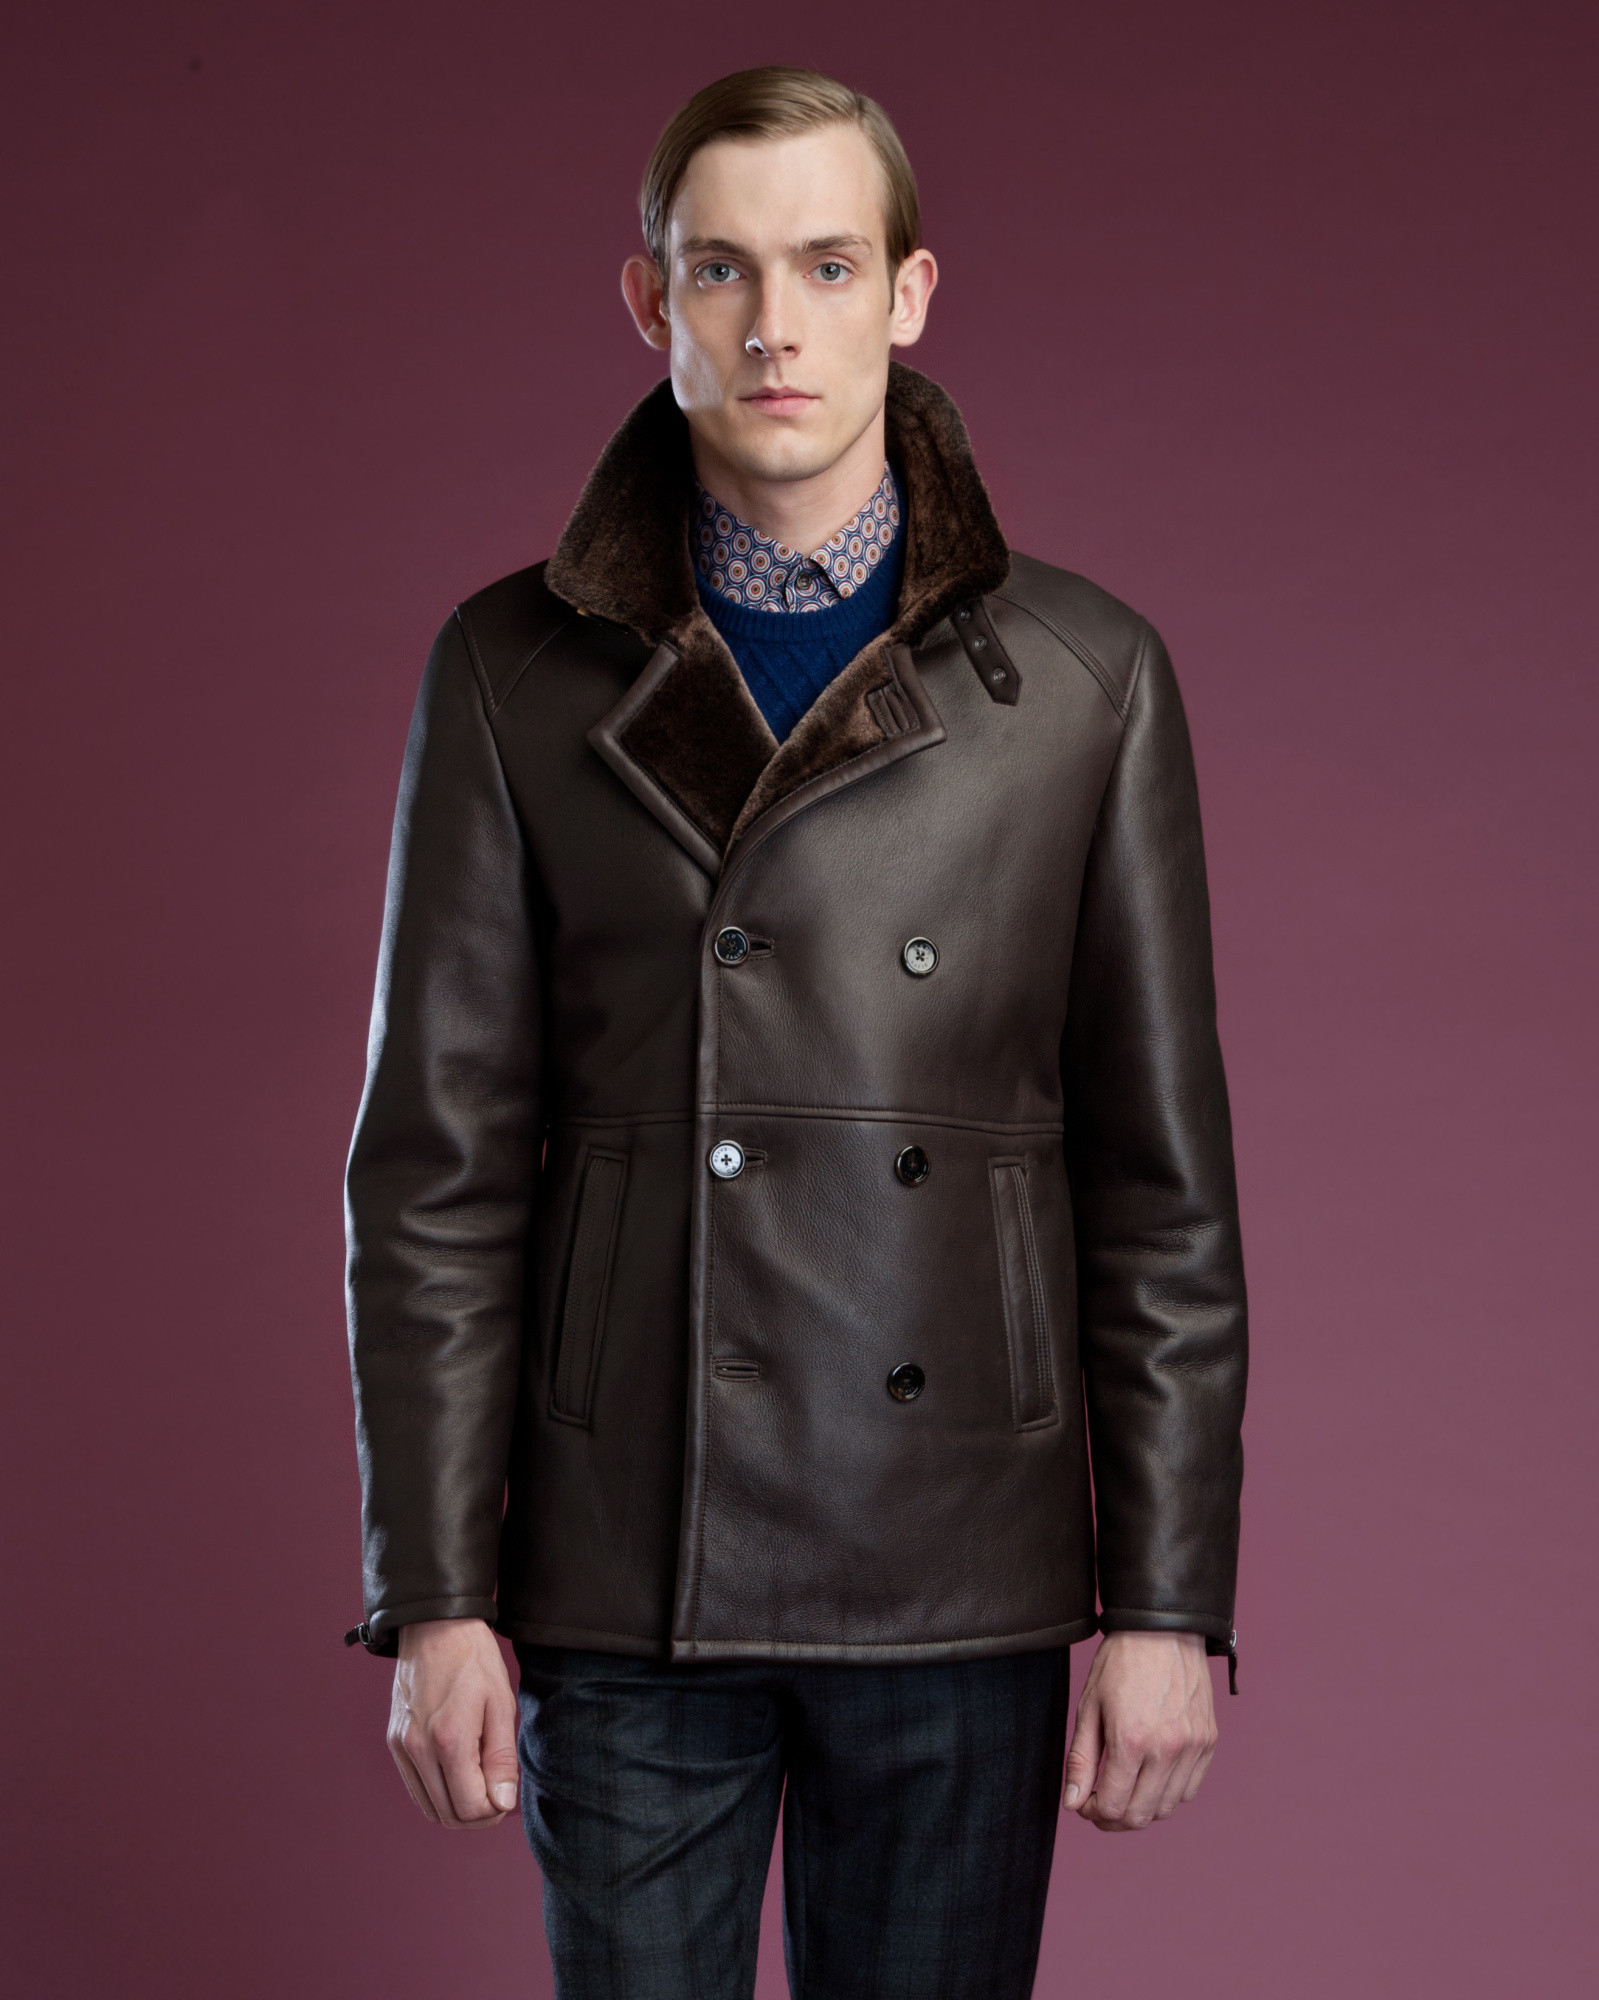 Leather Pea Coats For Men - Coat Nj